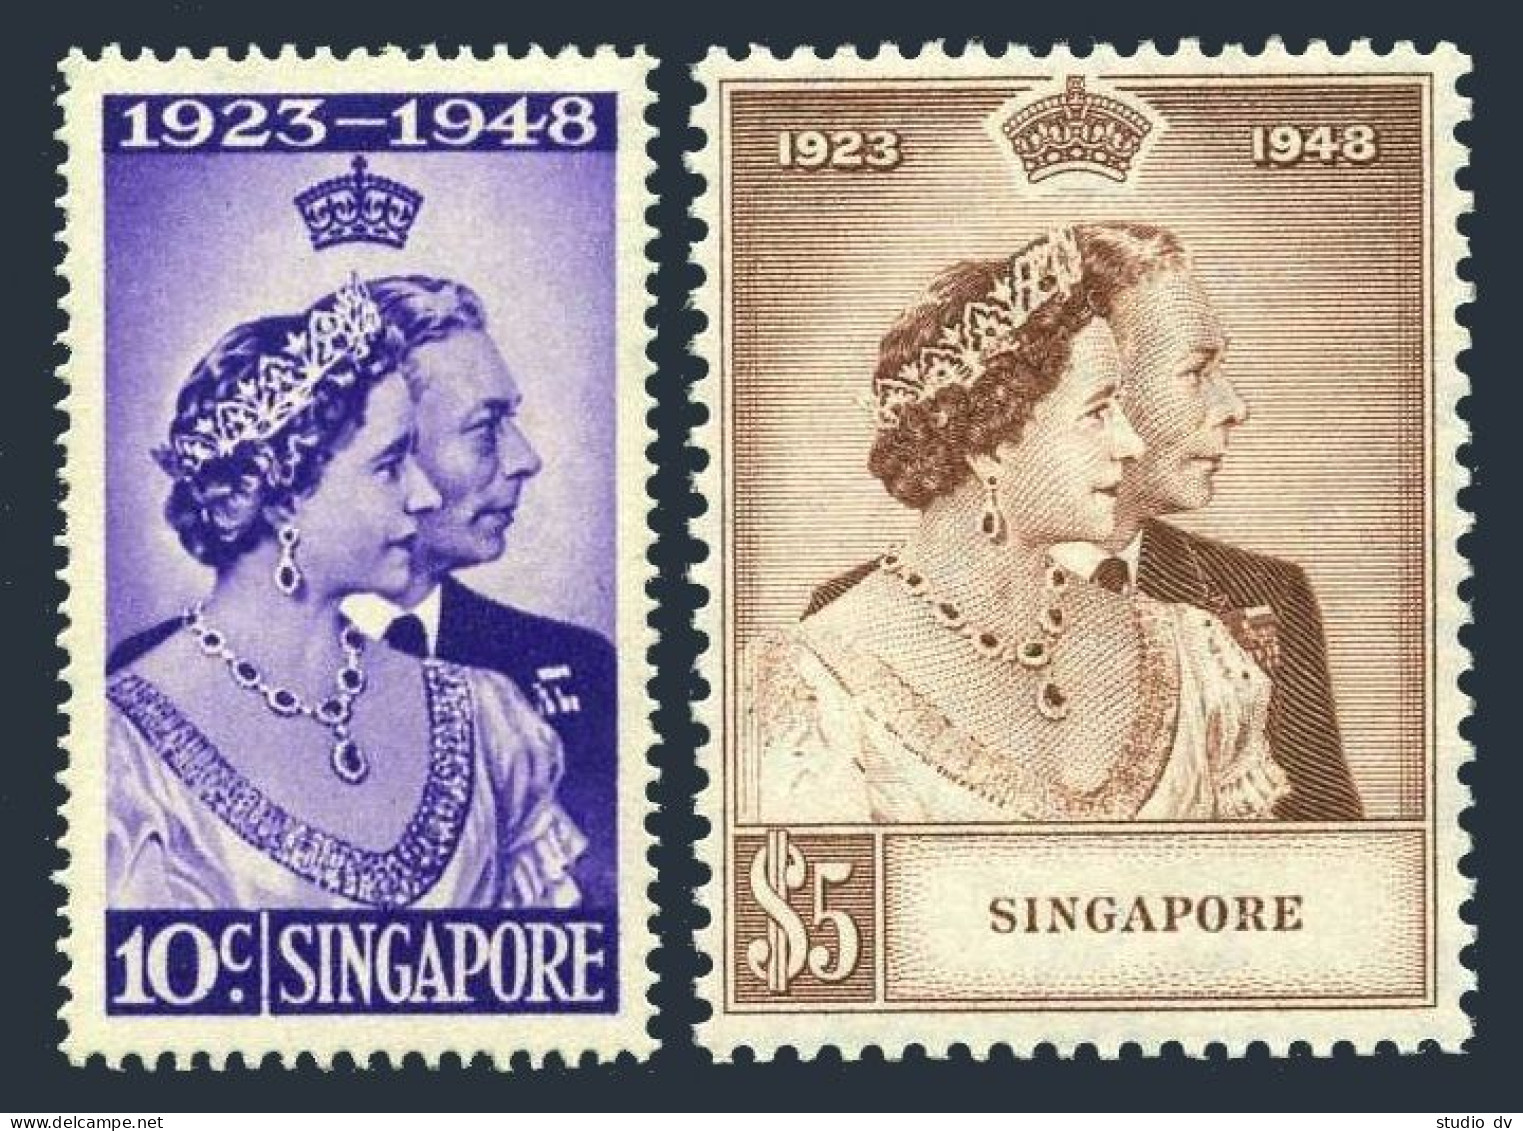 Singapore 21-22, Hinged. Mi 21-22. Silver Wedding, 1948. George VI, Elizabeth. - Singapore (1959-...)